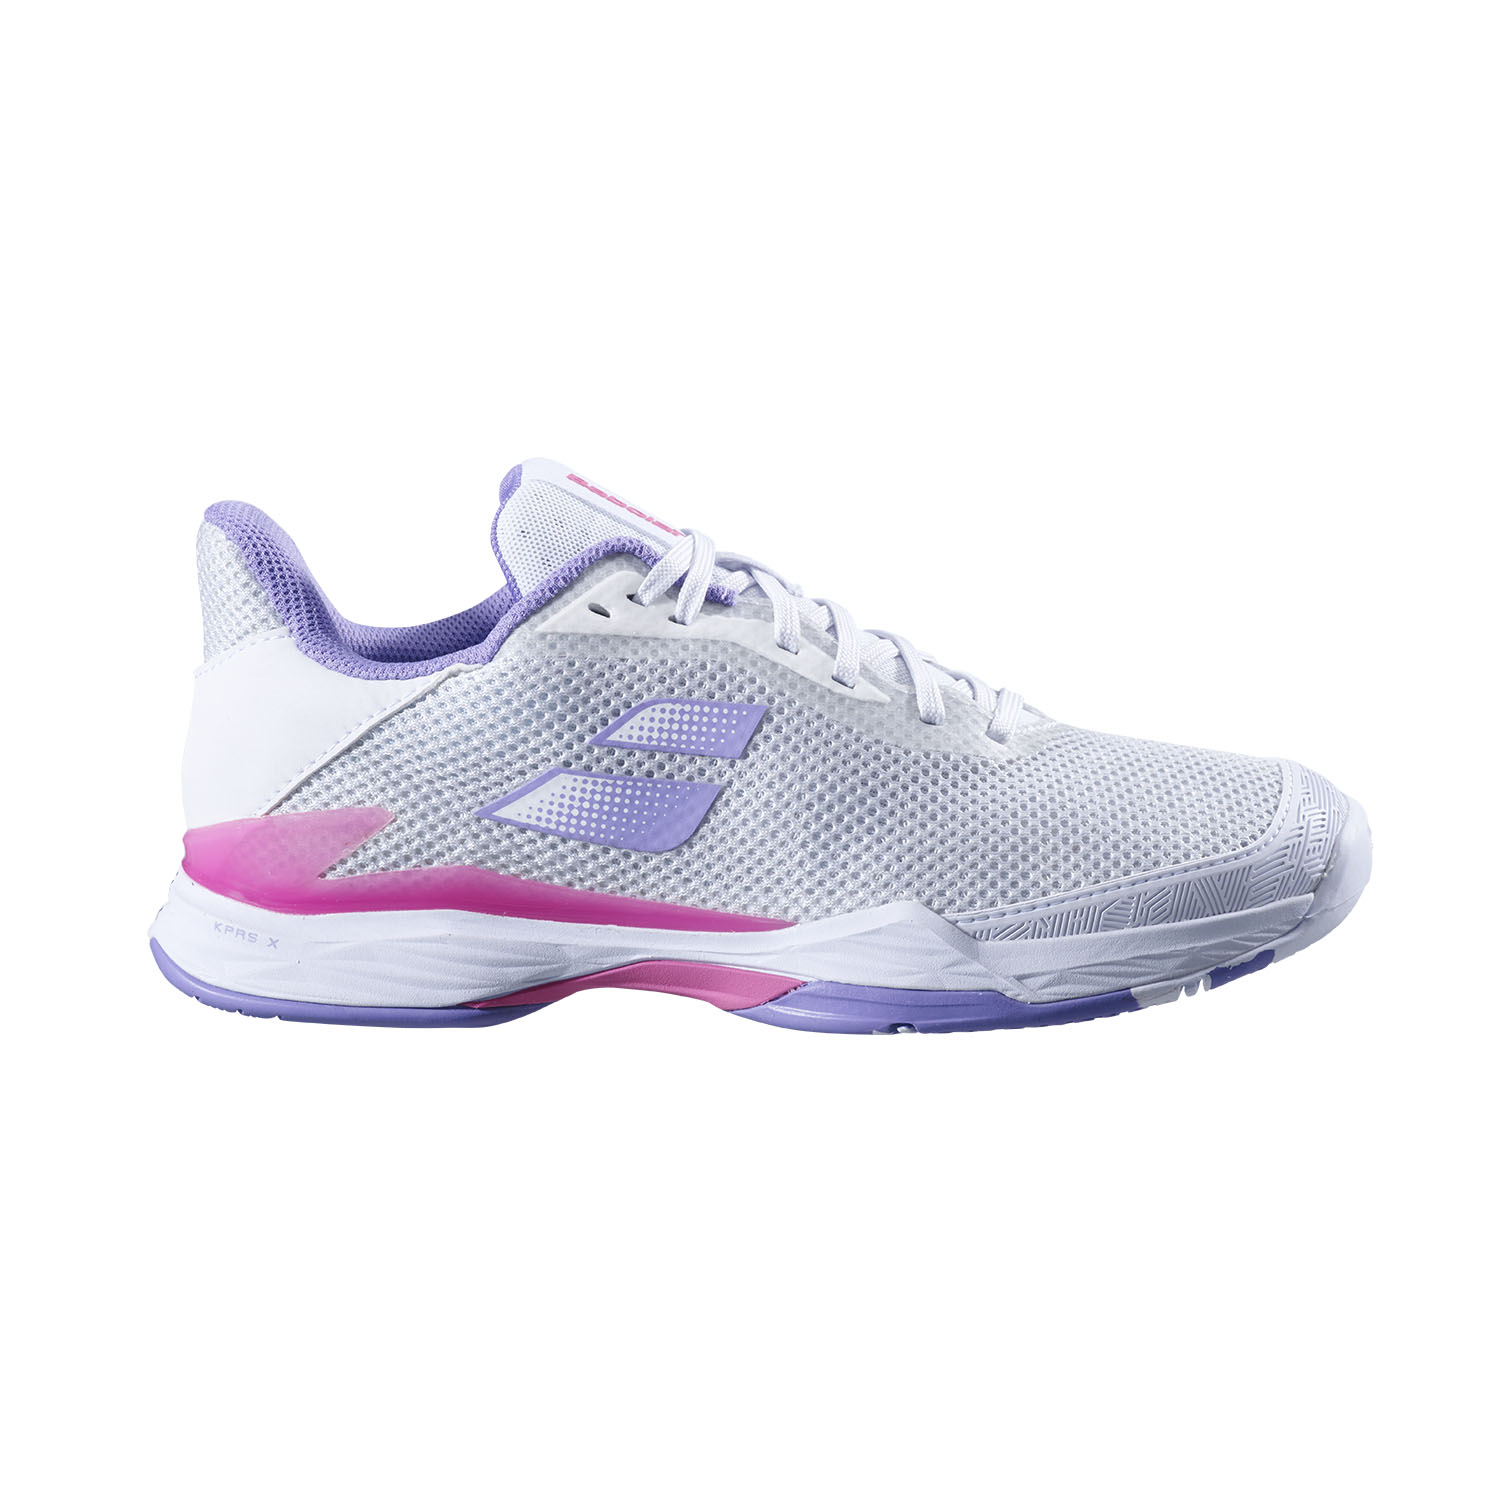 Babolat Jet Tere All Court Women's Tennis Shoes - White/Lavender